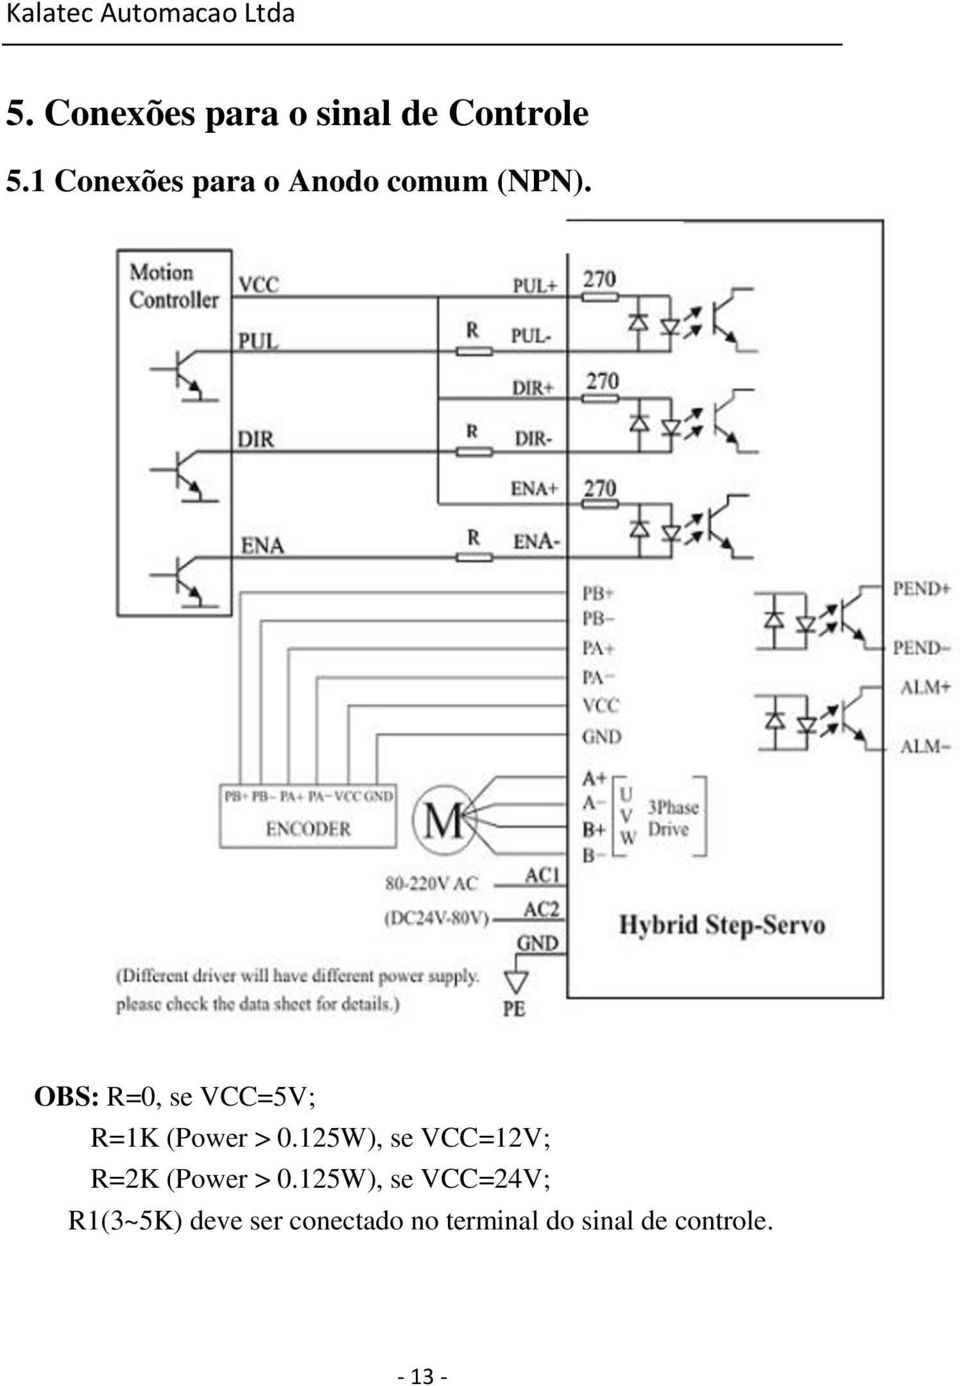 OBS: R=0, se VCC=5V; R=1K (Power > 0.